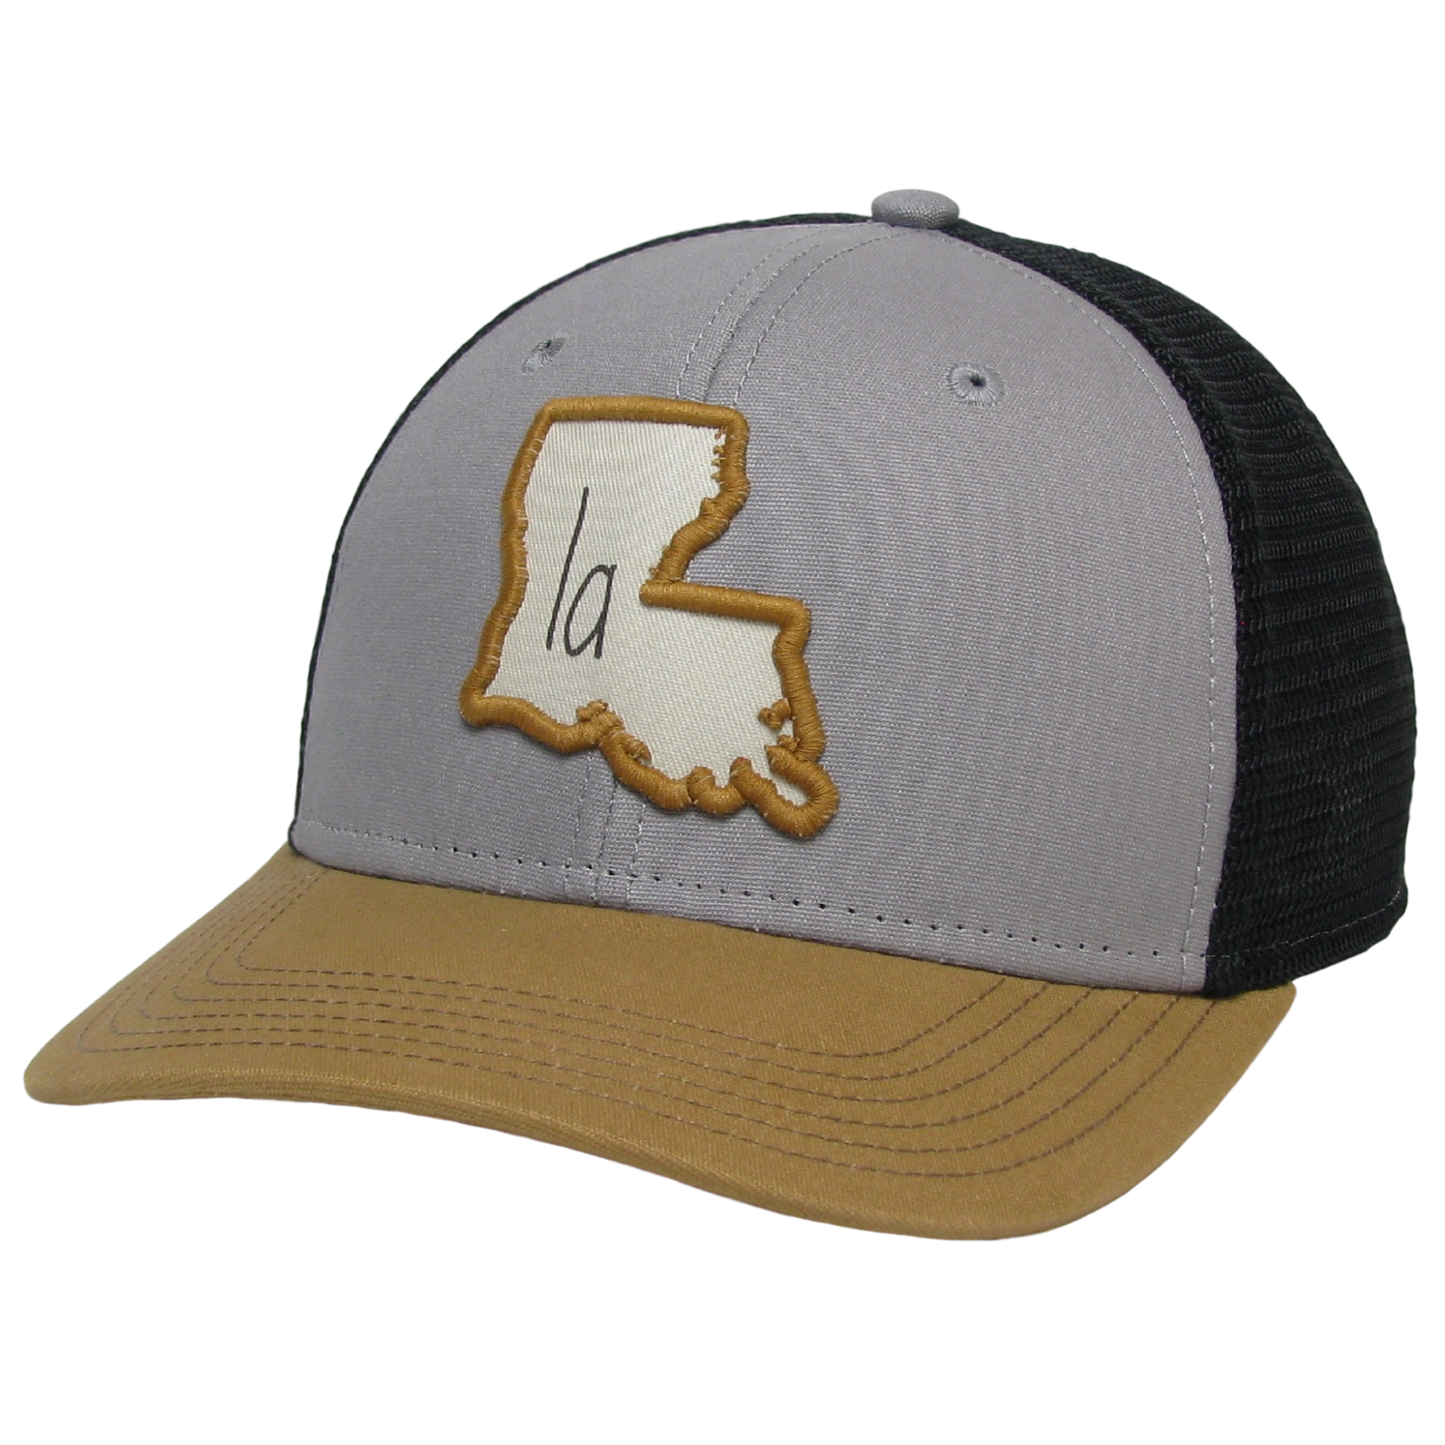 Louisiana Mid-Pro Trucker Hat in Grey/Caramel/Black